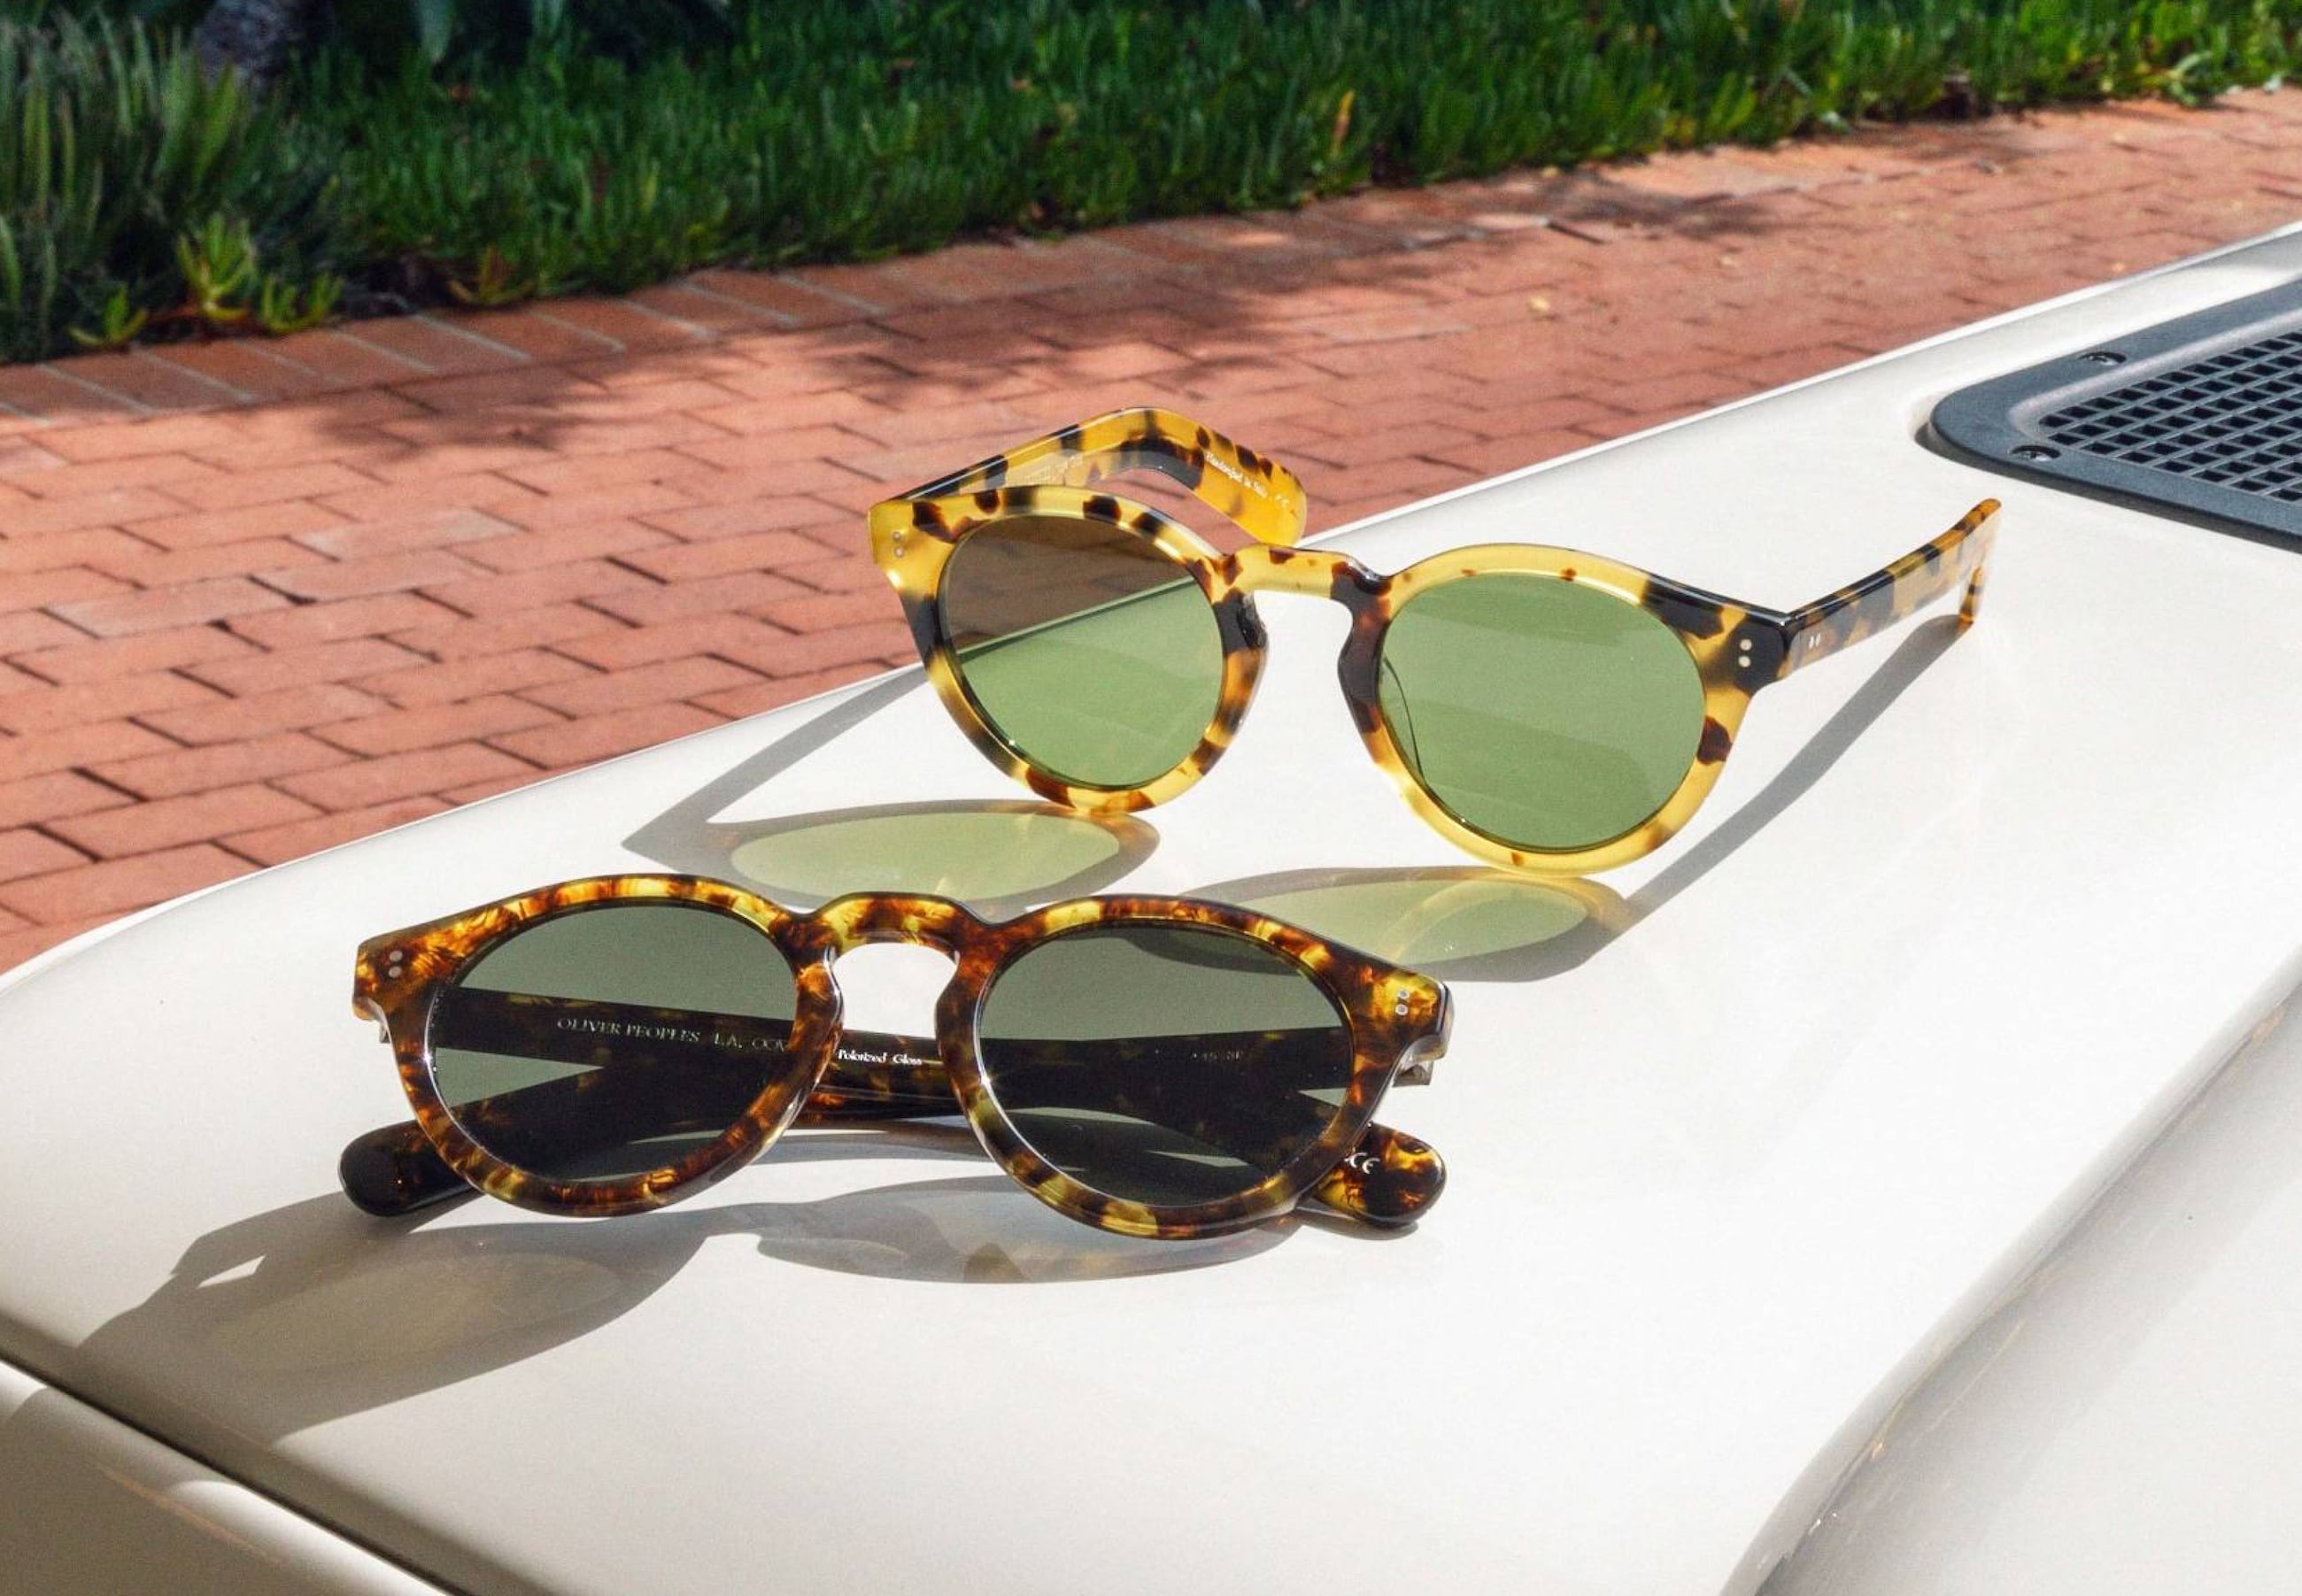 oliver peoples sunglasses. サングラス/メガネ ファッション小物 レディース 公式 ページ